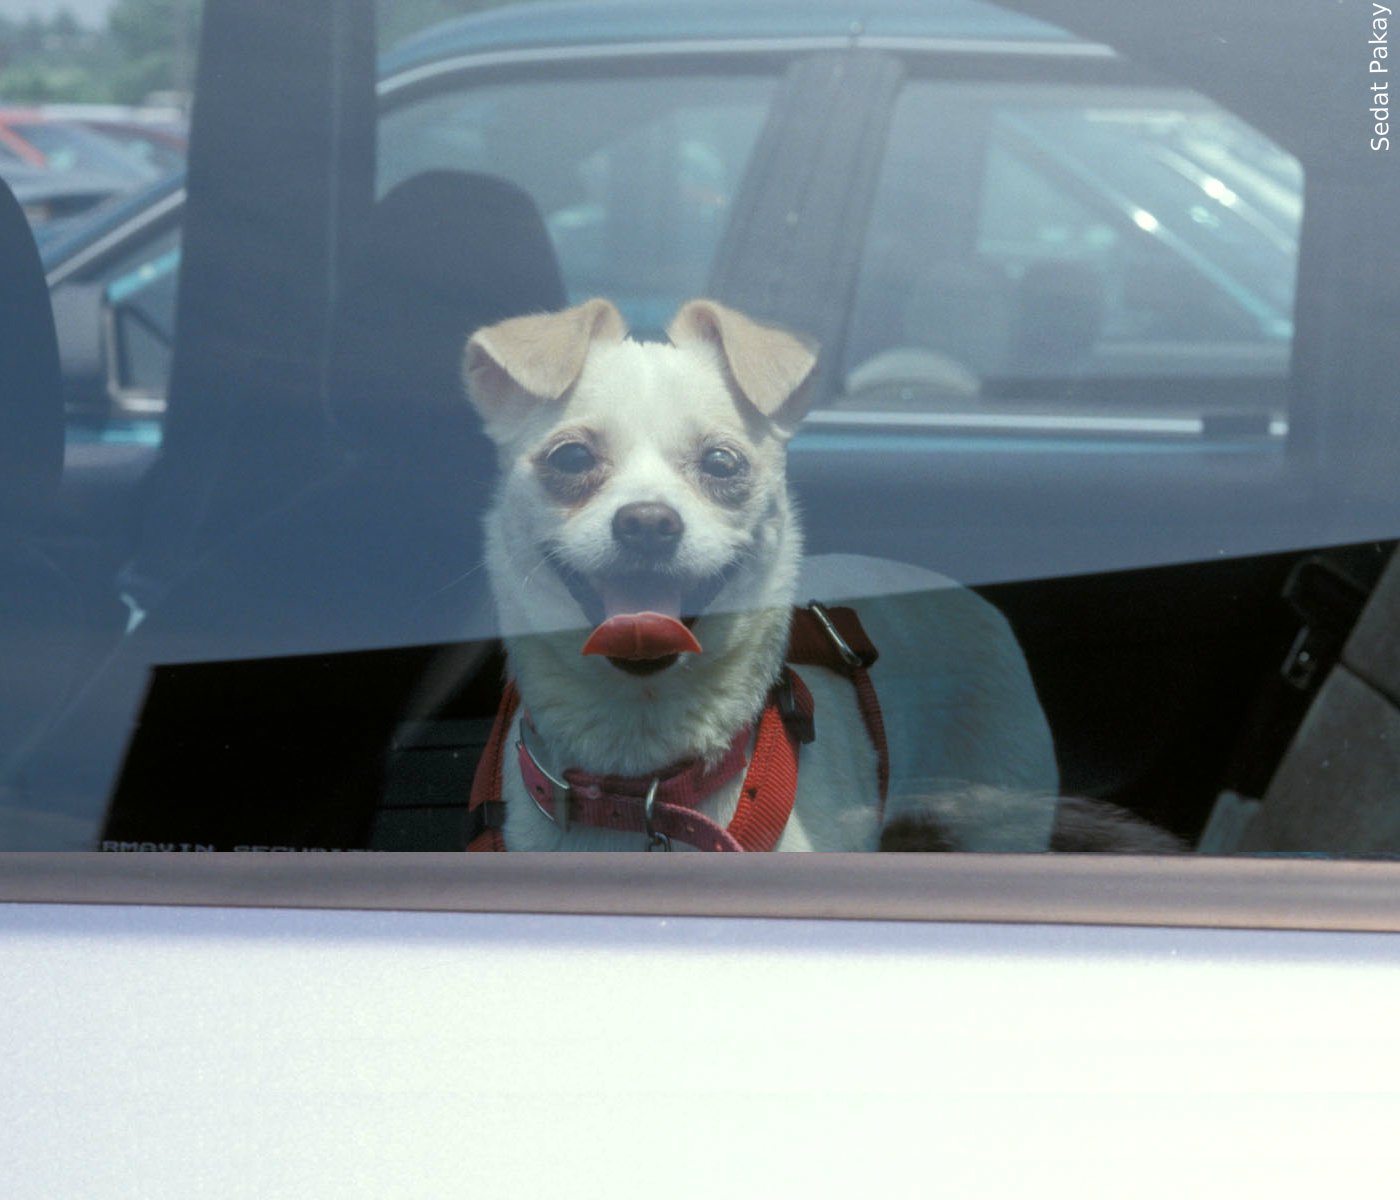 Dogs in hot cars | Blog | PETA Latino